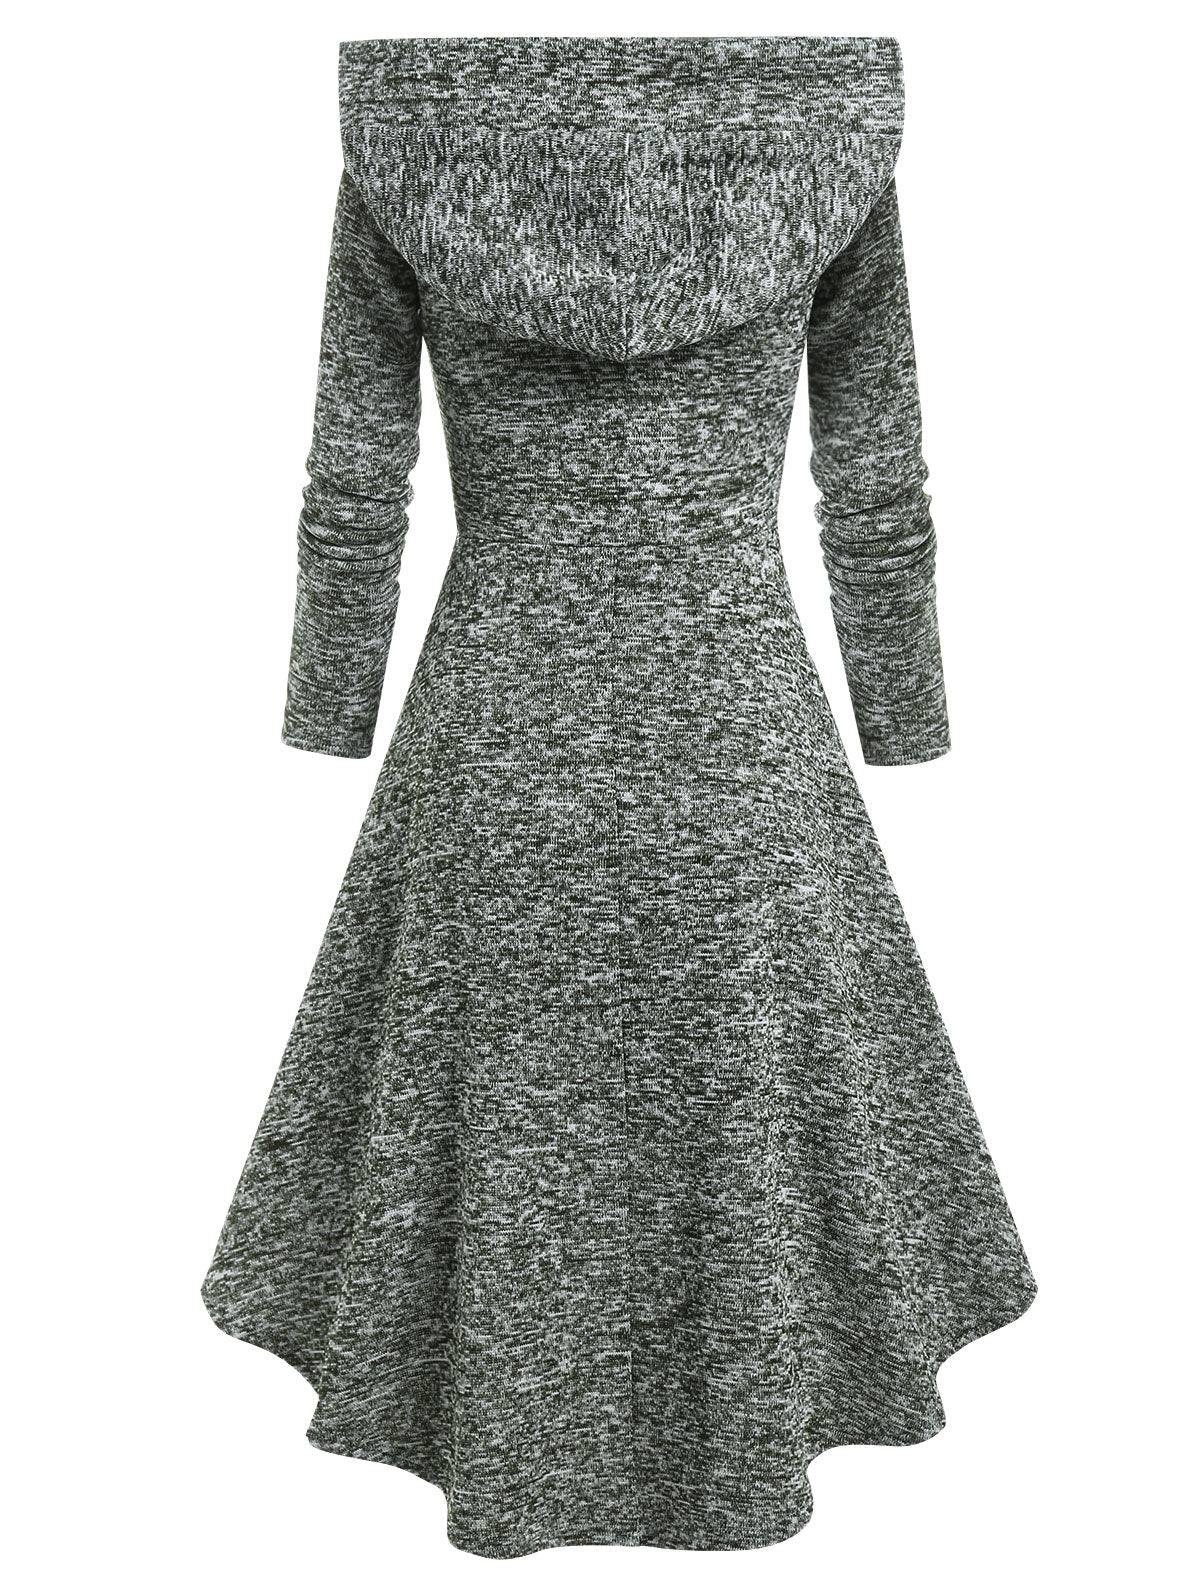 Hooded Heathered High Low Midi Knitted Dress Knit High Waist A Line Midi Irregular Vestido Feminino Autumn Winter